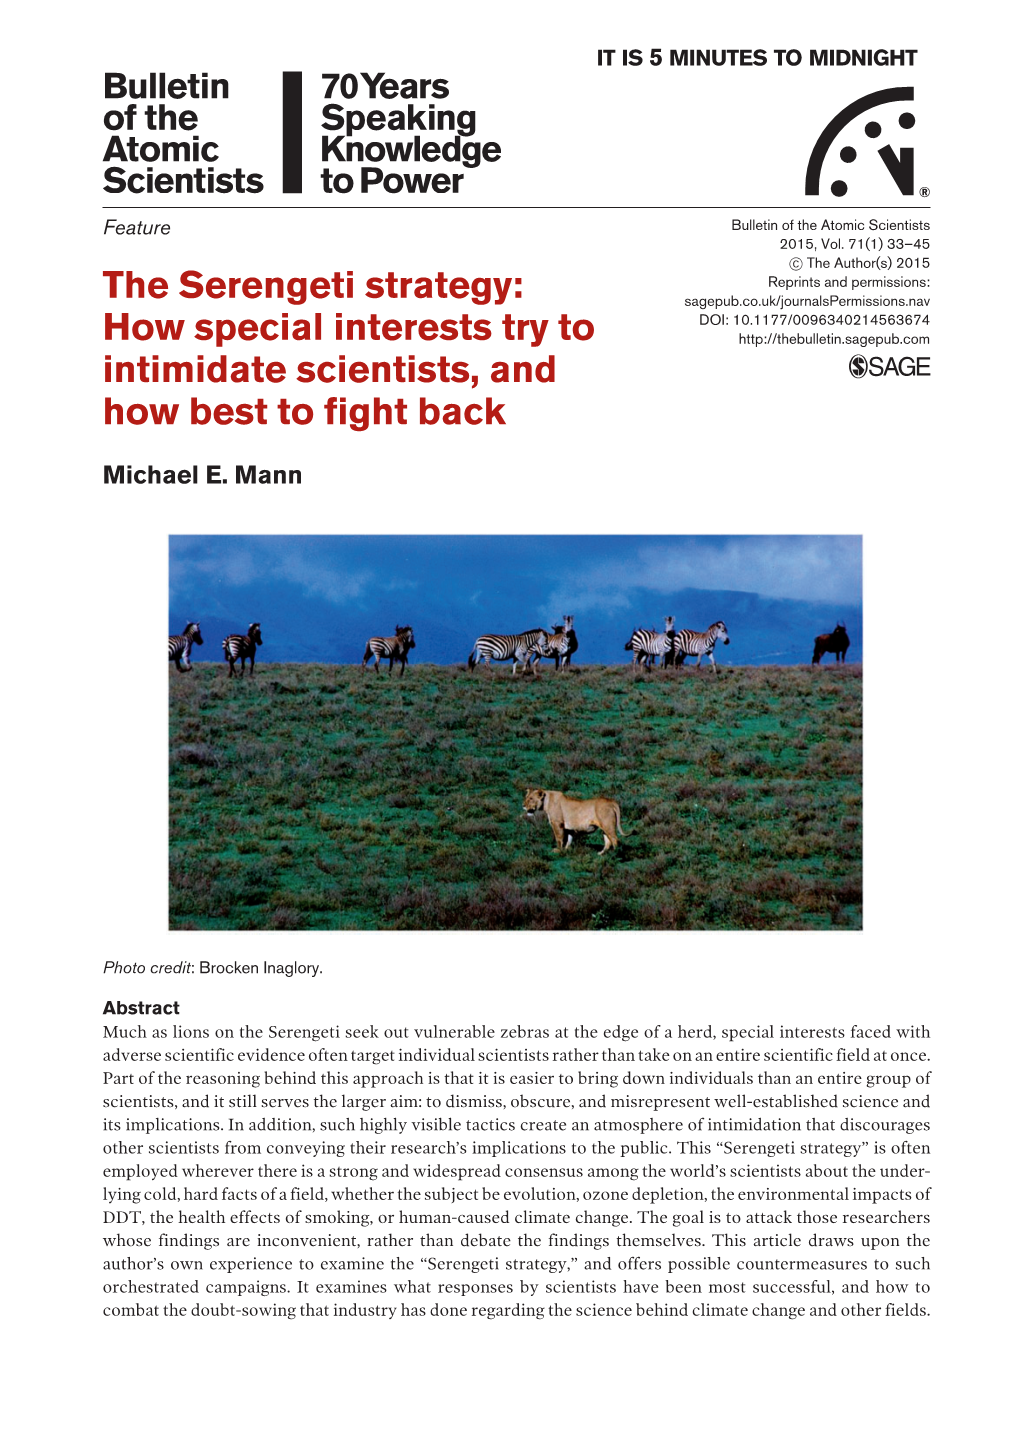 The Serengeti Strategy